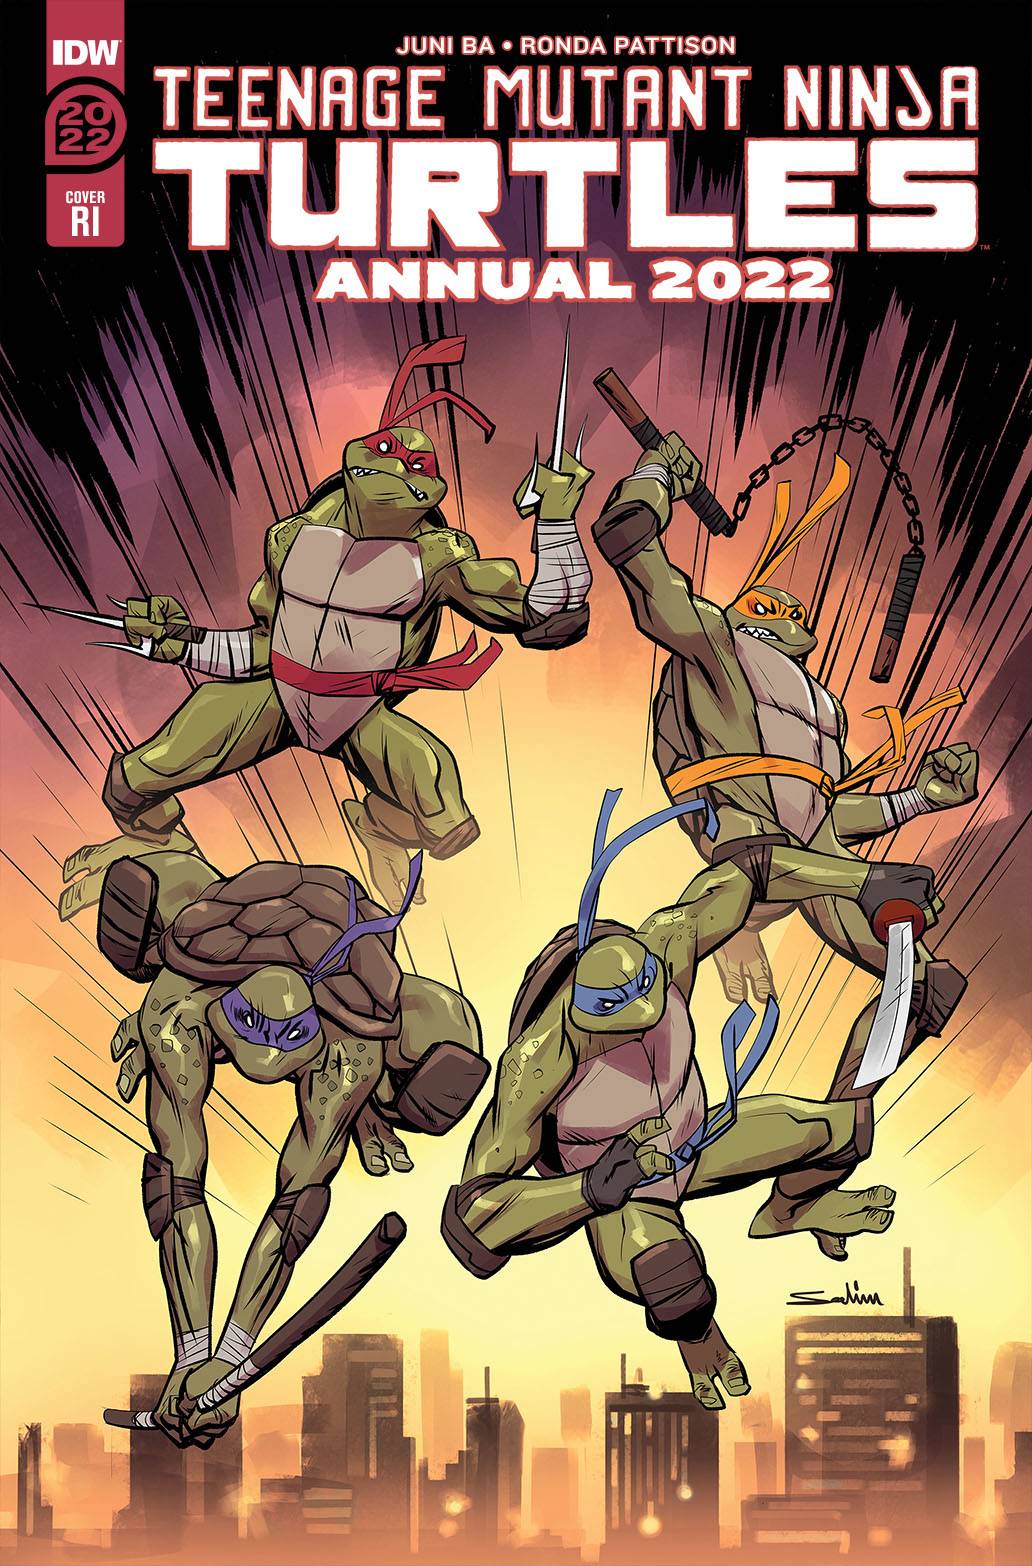 Teenage Mutant Ninja Turtles Annual 2022 Cover C 1 for 10 Incentive Busuru